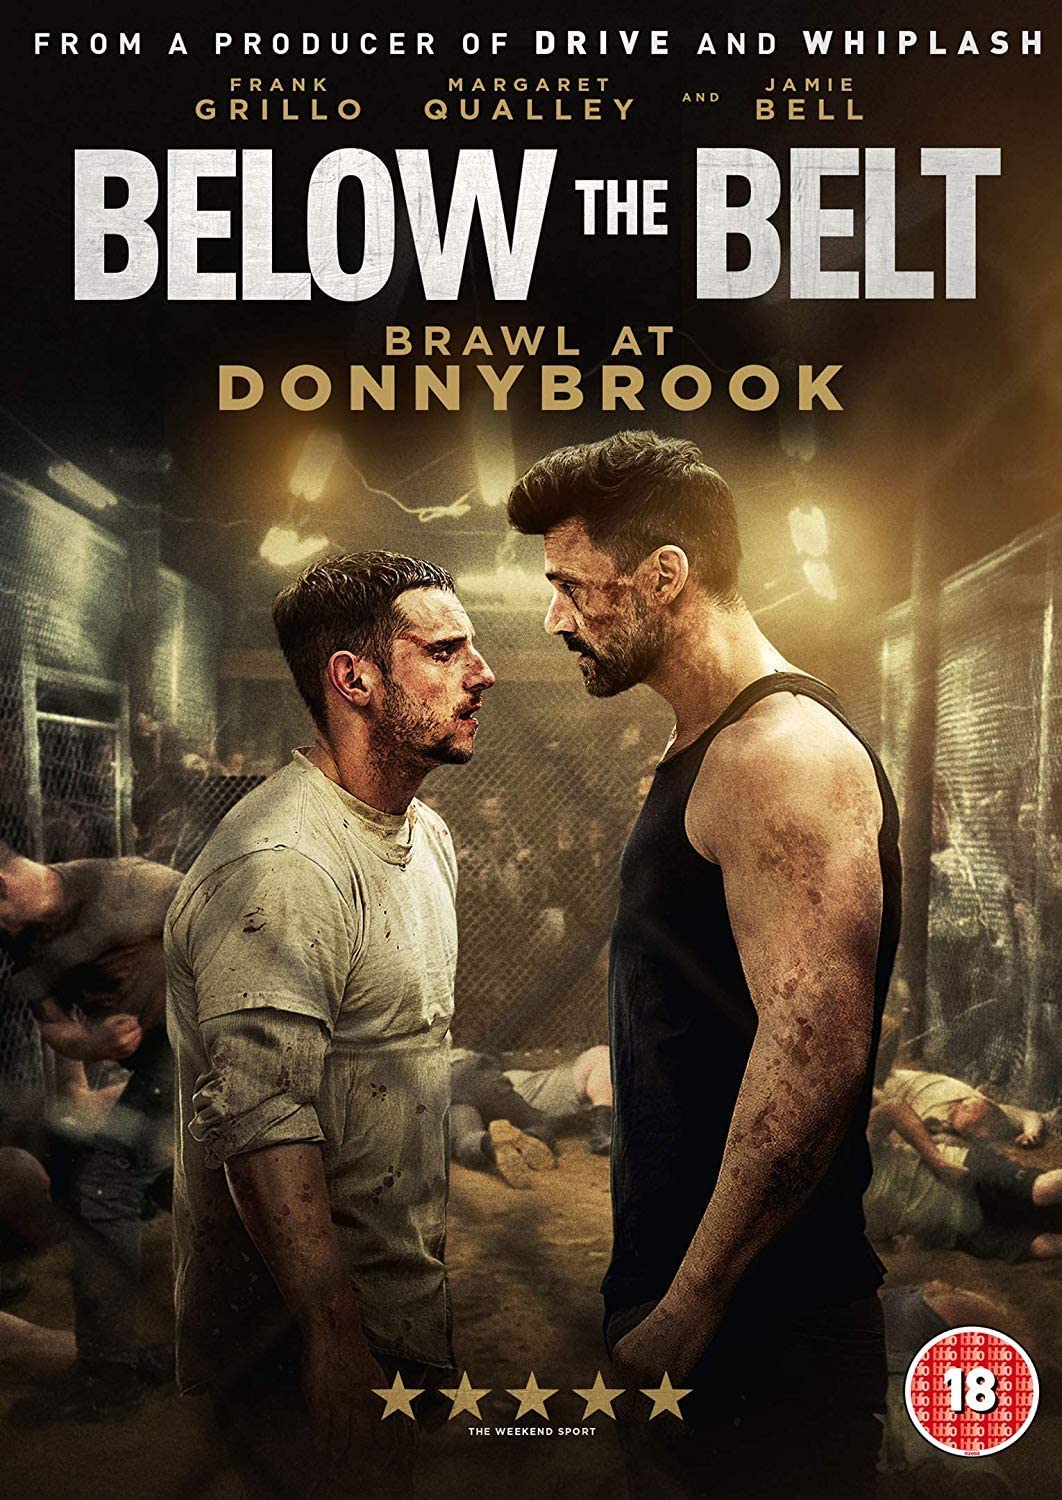 Below The Belt: Brawl at Donnybrook